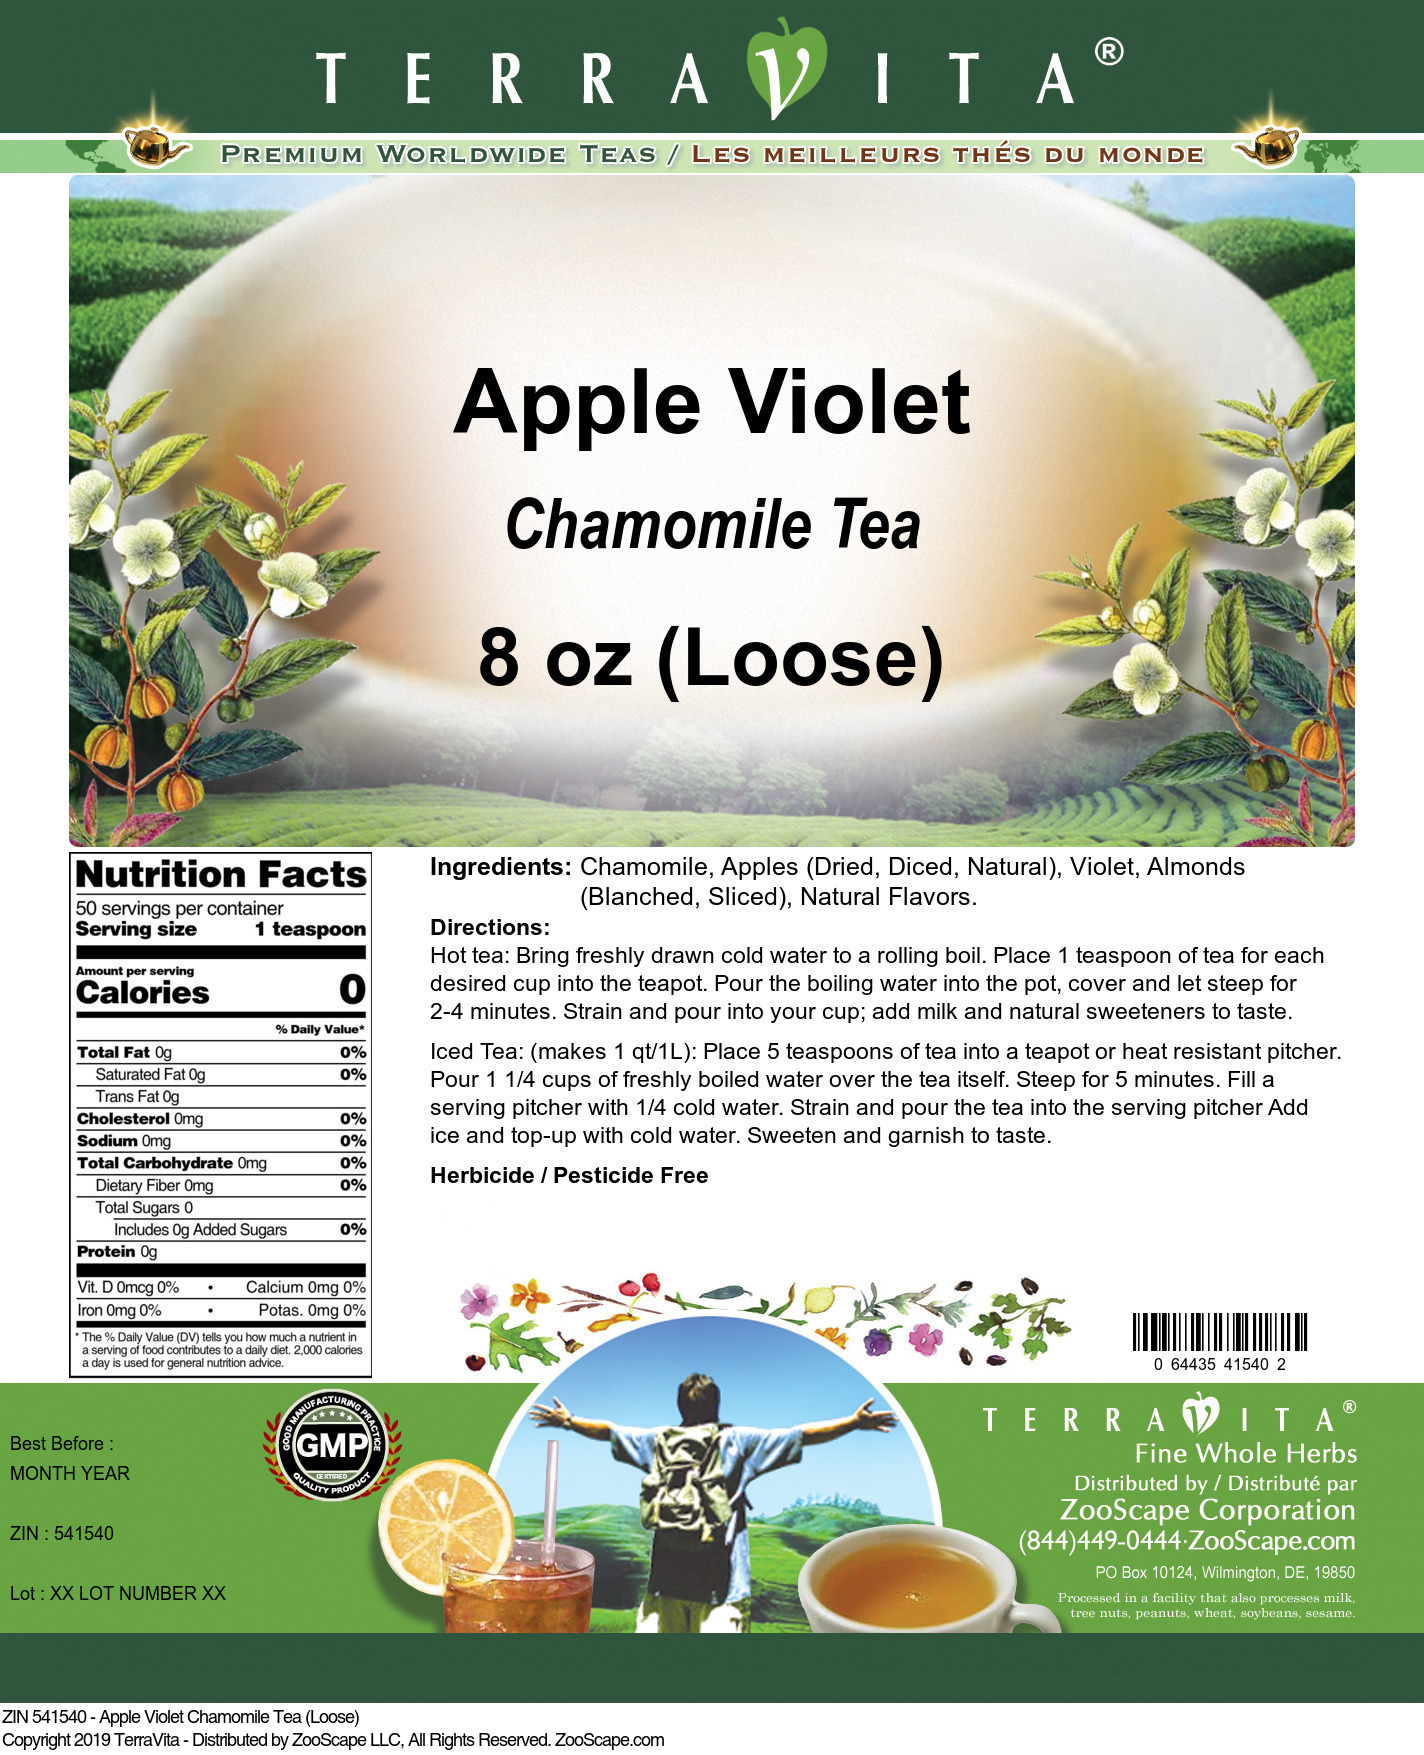 Apple Violet Chamomile Tea (Loose) - Label